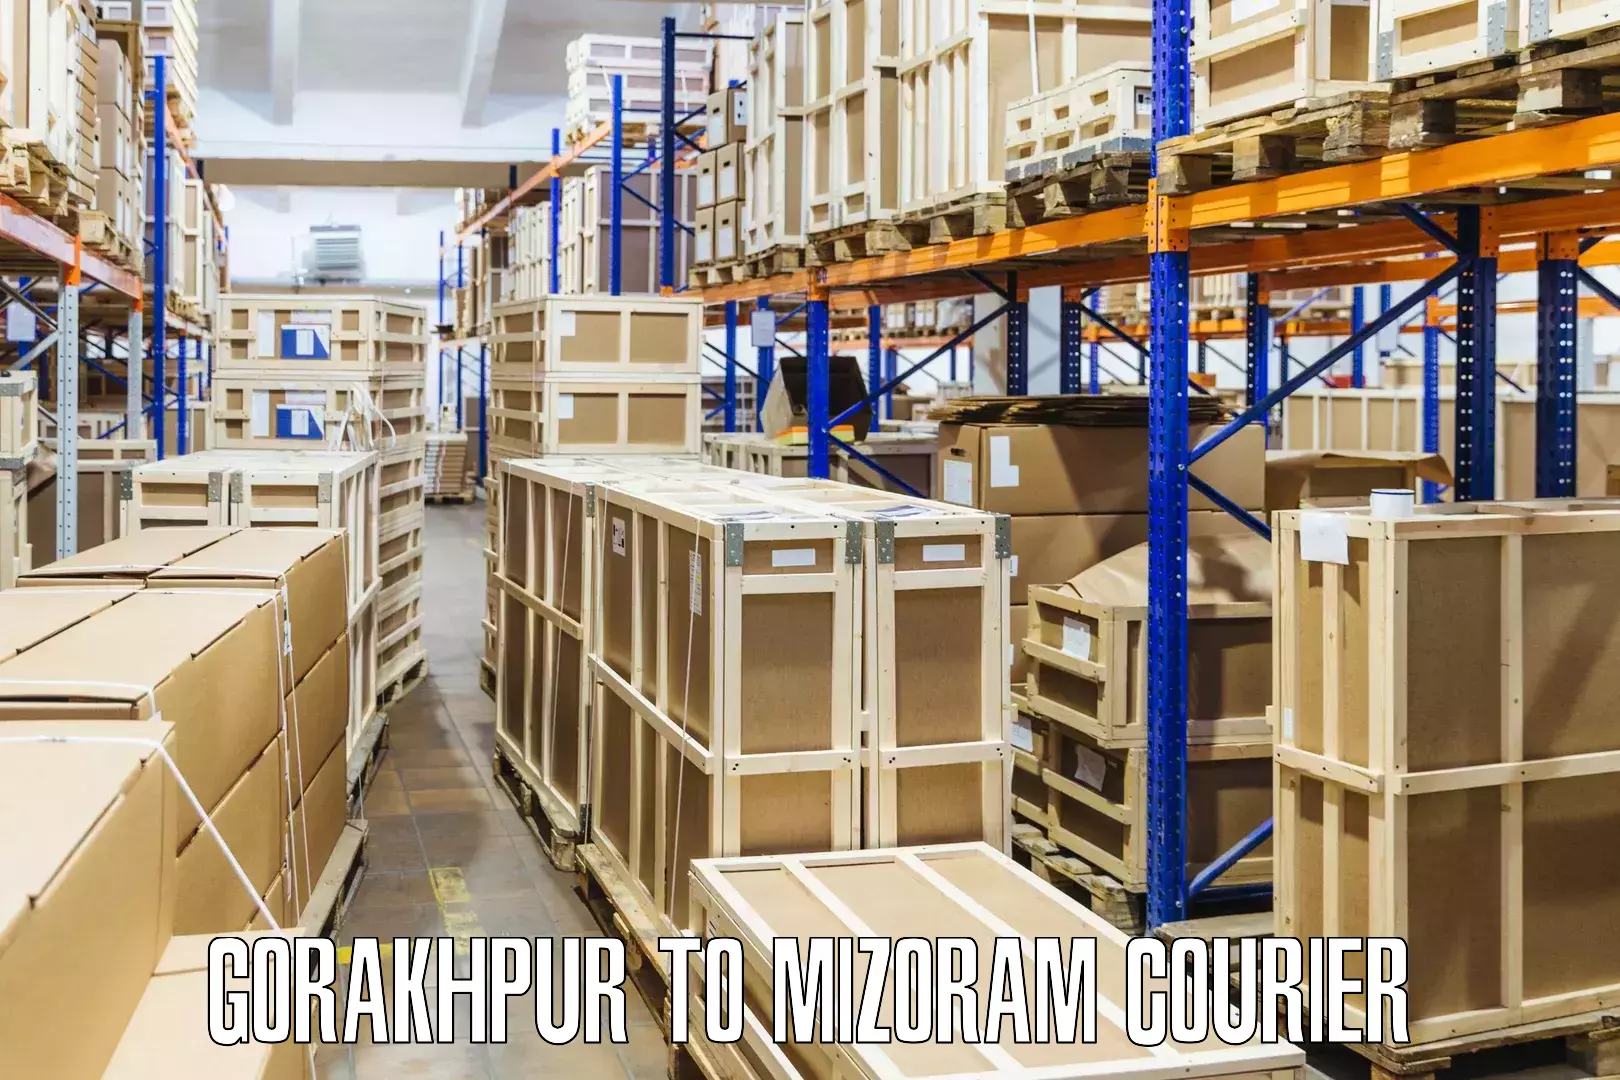 Courier service comparison Gorakhpur to Aizawl